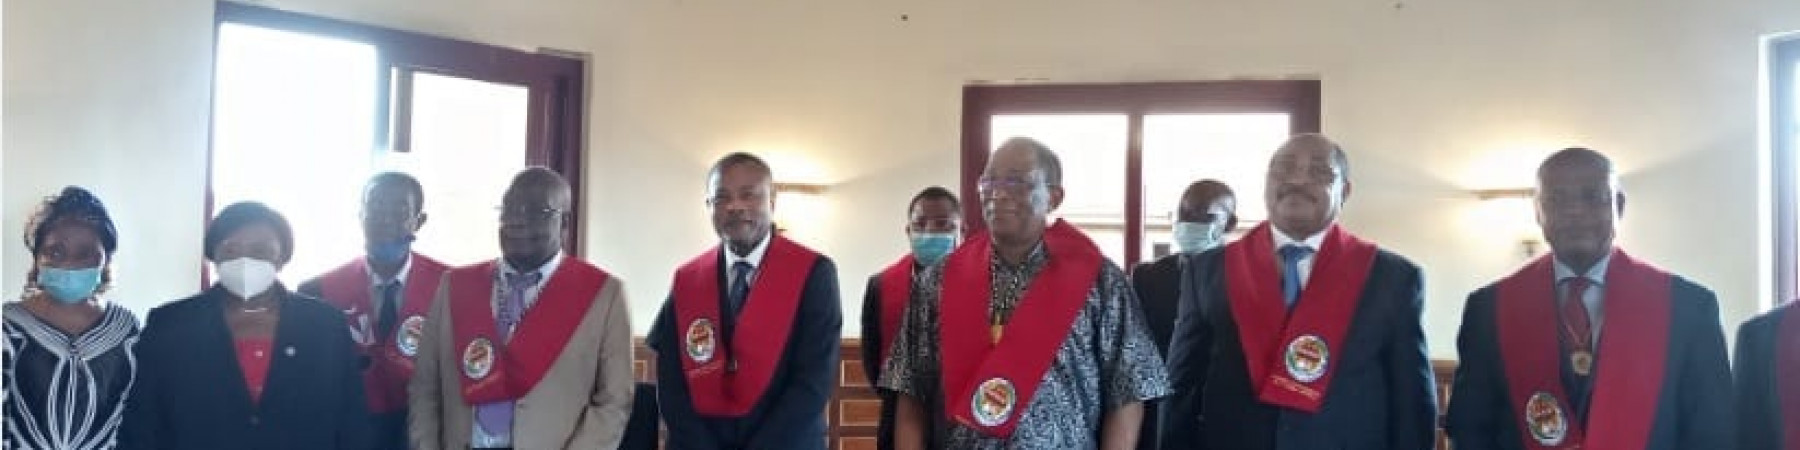 Miembros de la Academia Ecuatoguineana